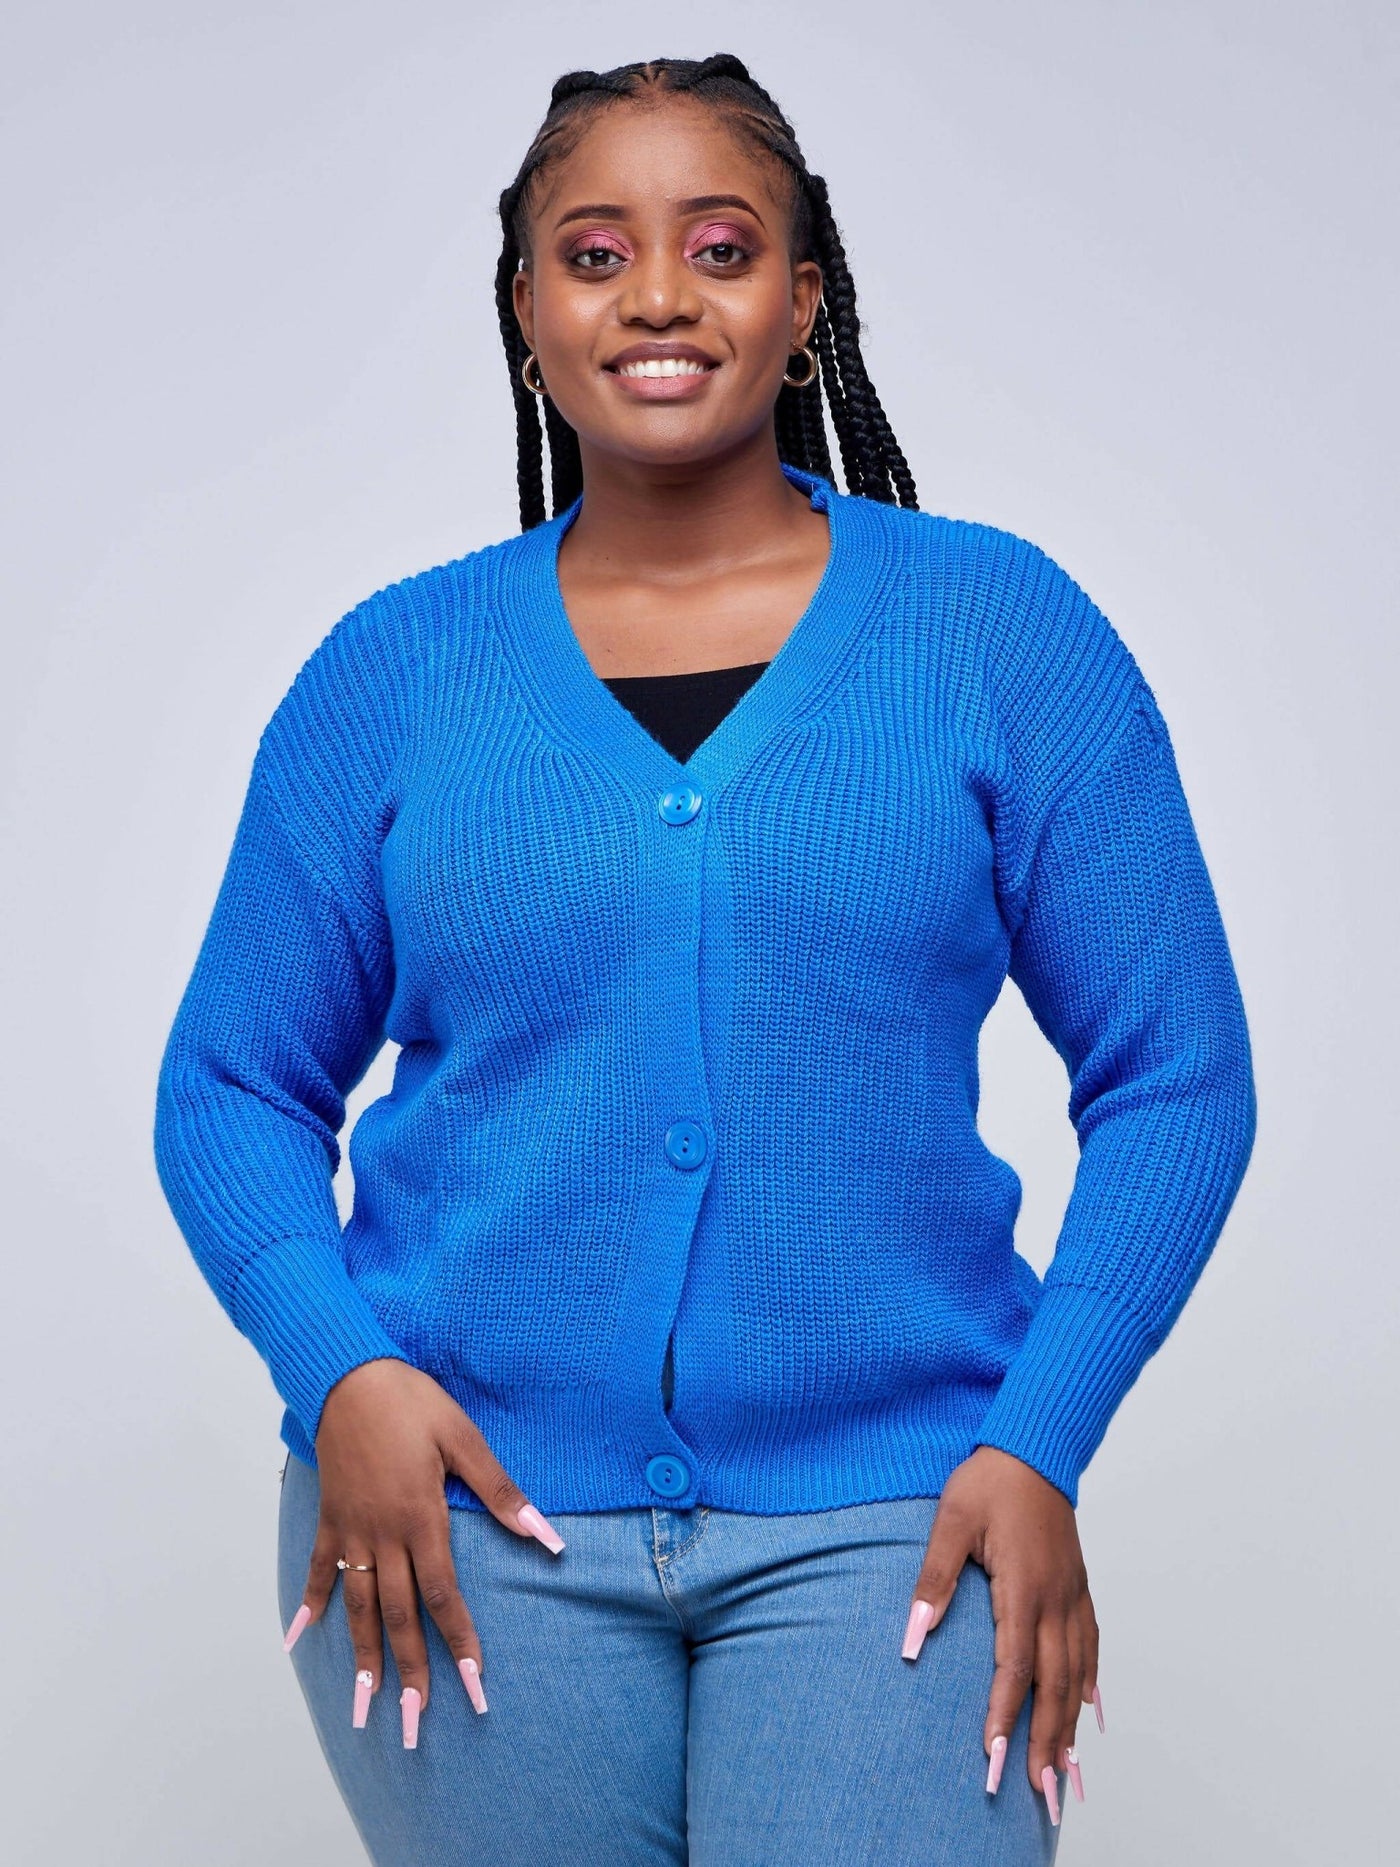 JMC Knit Sweater - Royal Blue - Shopzetu